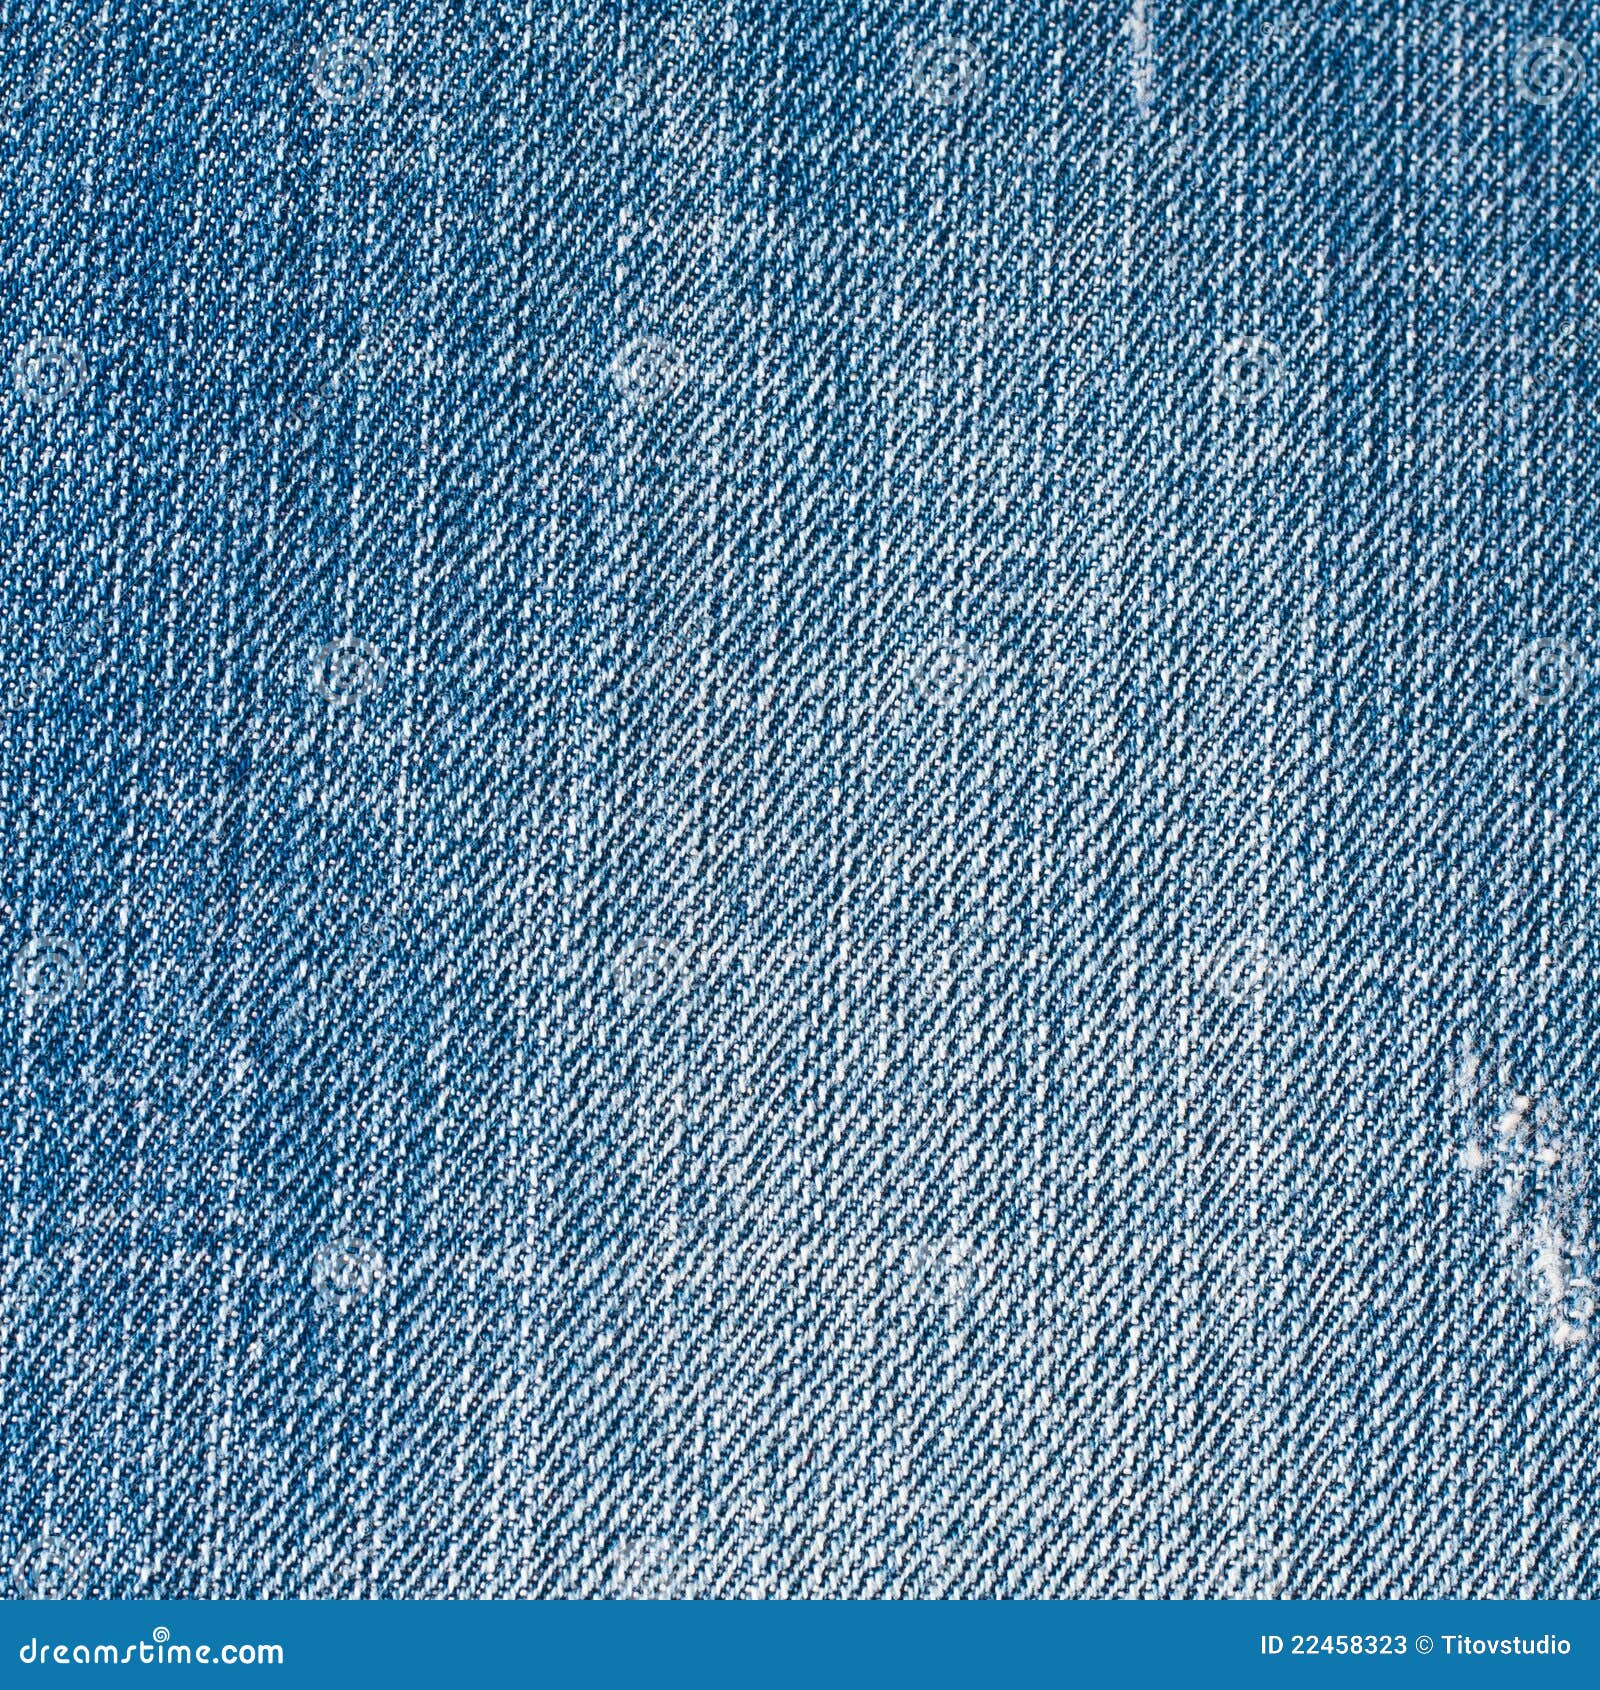 Blue denim texture stock image. Image of clothing, stitch - 22458323